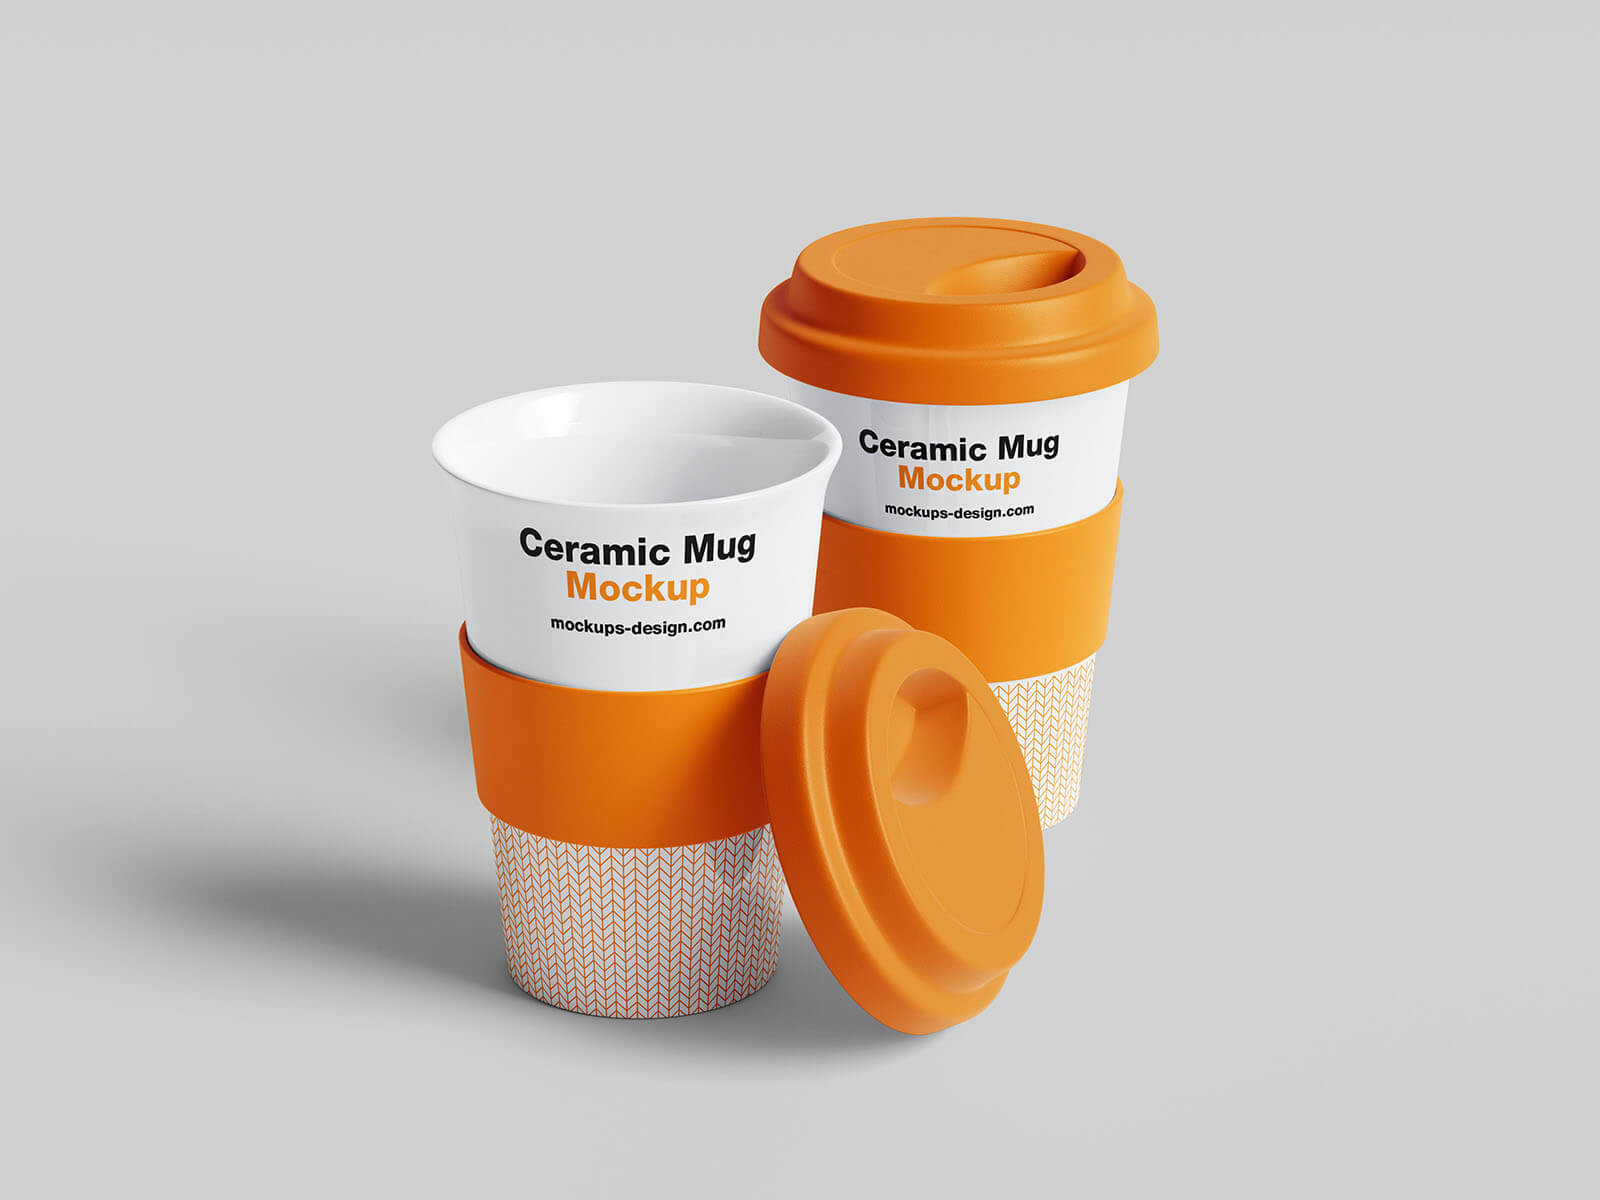 5 Free Reusable Ceramic Mug With Cap Mockup PSD Files5